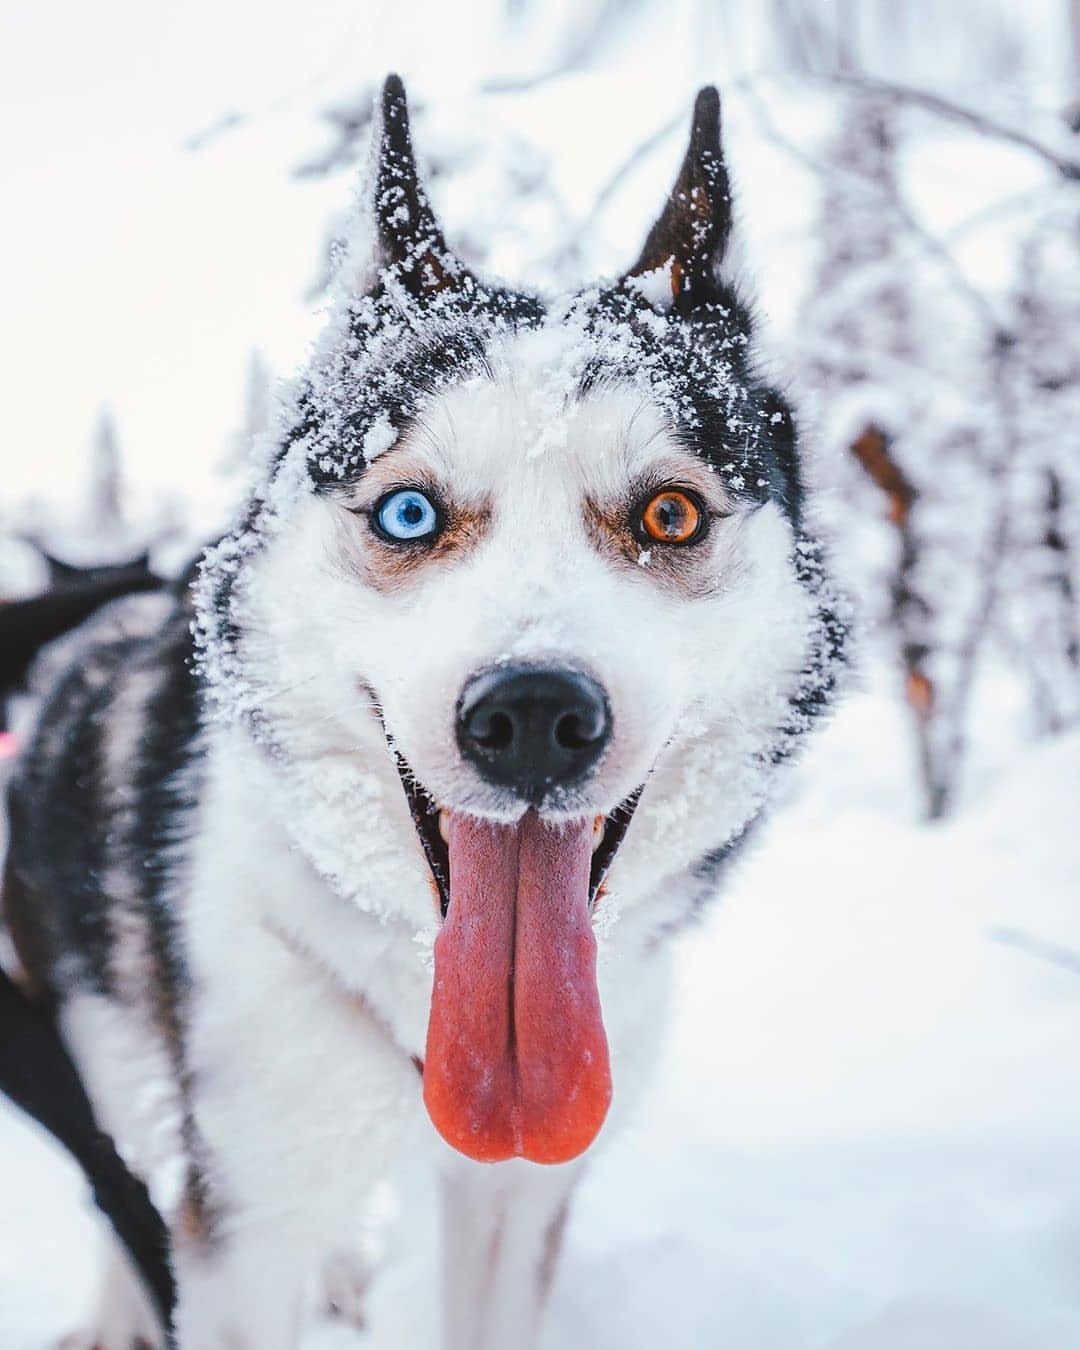 1080x1350, 121 Kb / собака, глаза, язык, снег, хаски, гетерохромия